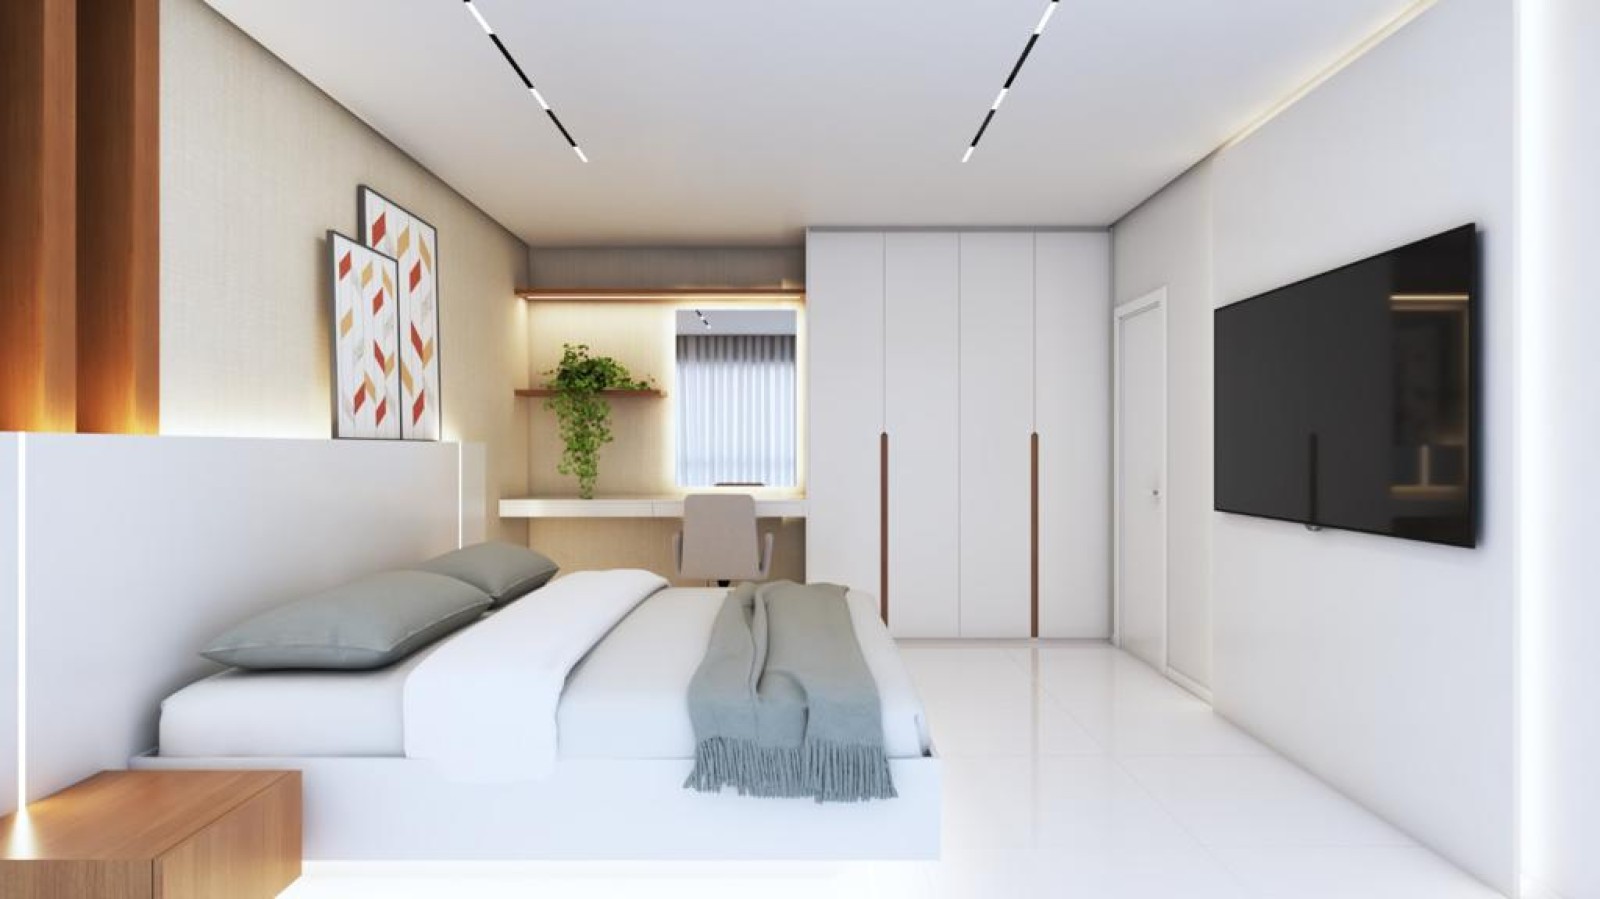 2 Bedroom Luxury House, for sale, in Portimão, Algarve_224251